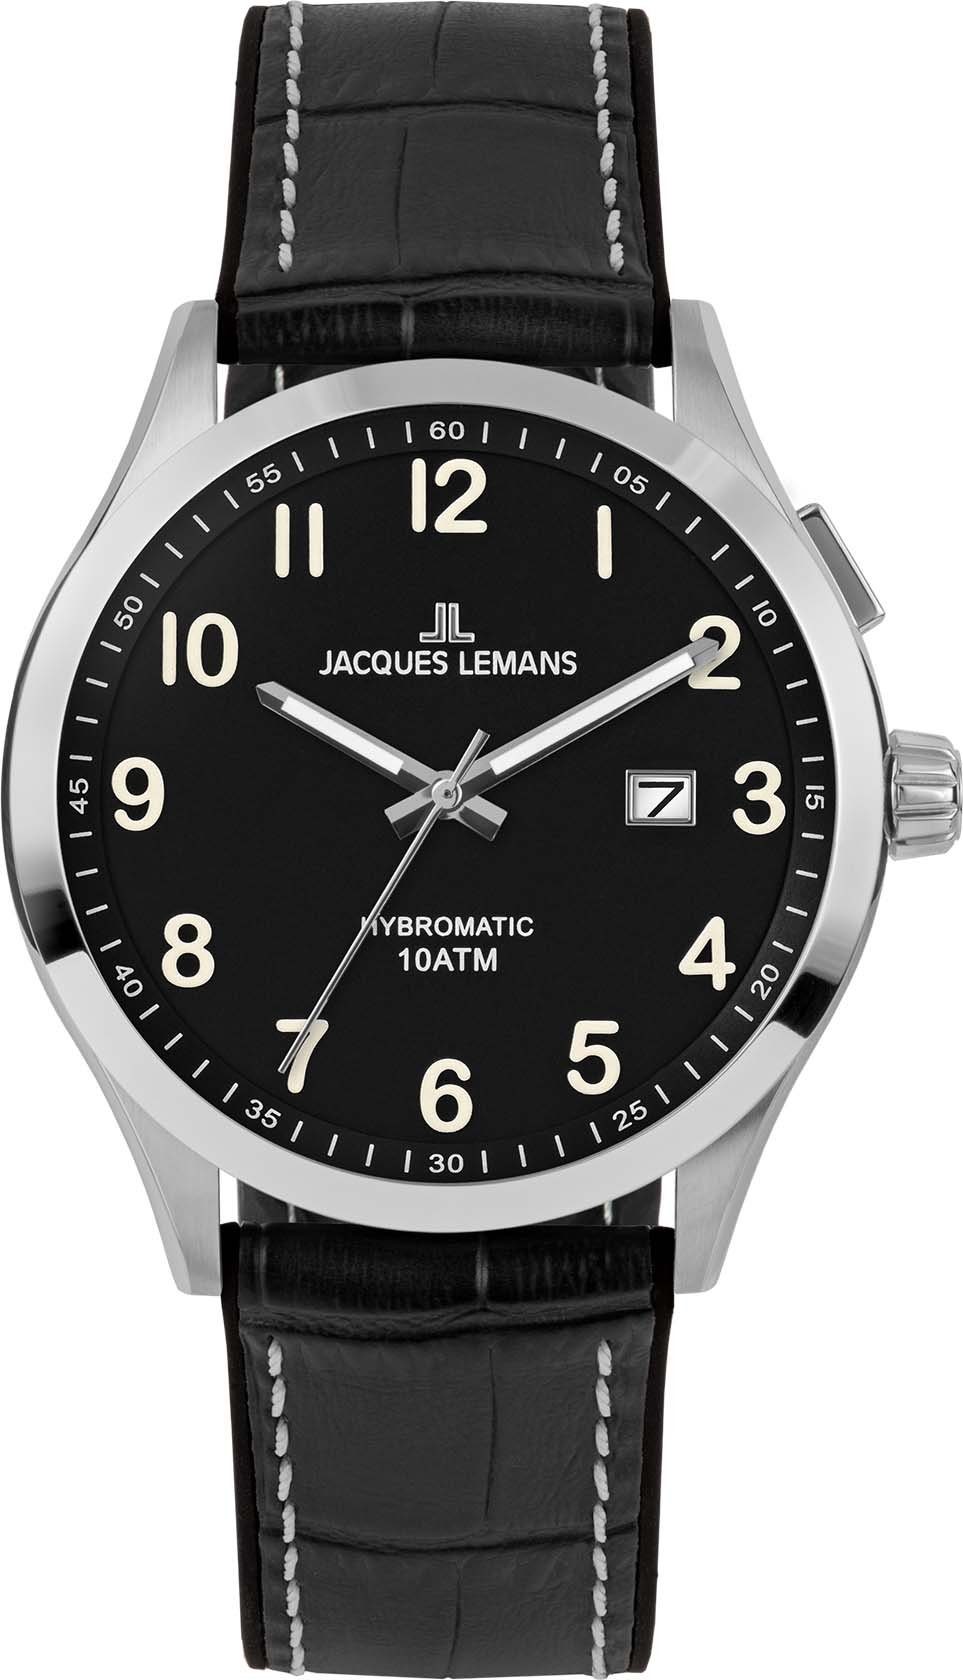 Jacques Lemans Kineticuhr Hybromatic, 1-2130D | Armbanduhren